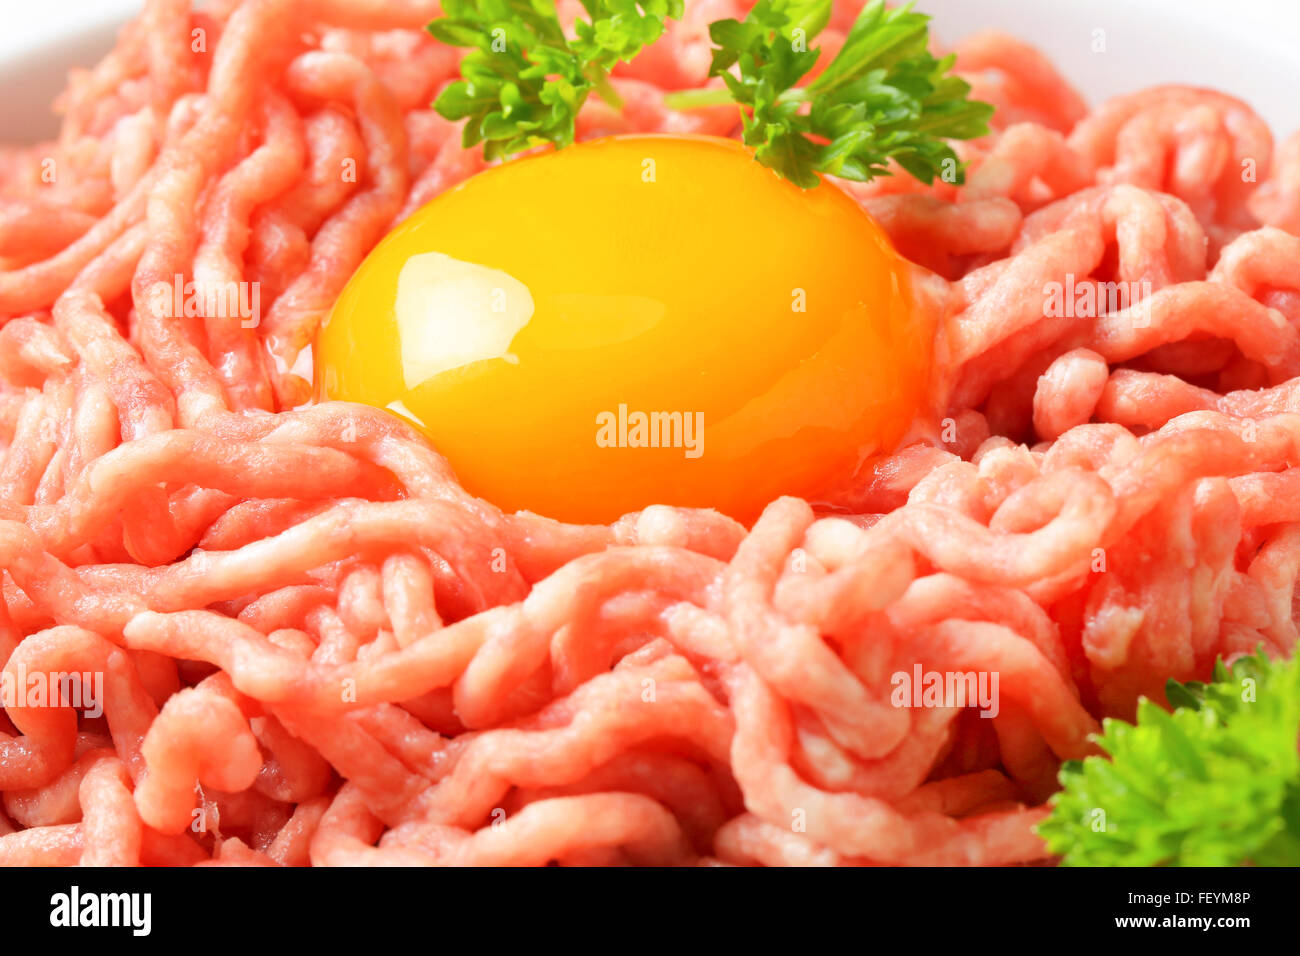 Detalle de carne picada cruda con yema de huevo Foto de stock